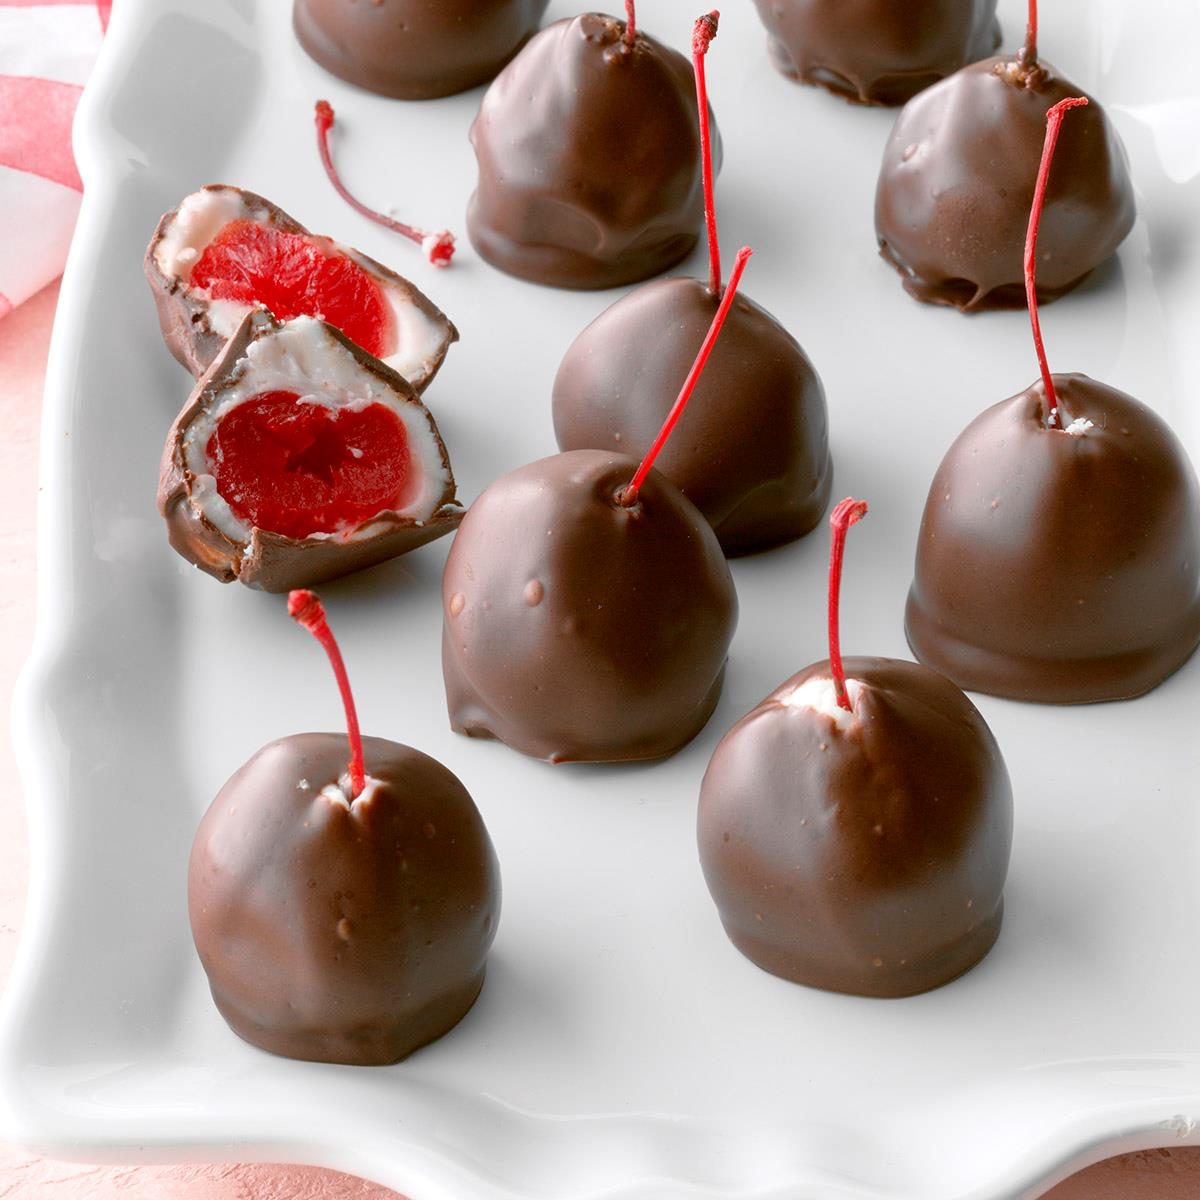 https://www.tasteofhome.com/wp-content/uploads/2018/01/Chocolate-Covered-Cherries_EXPS_GBDBZ20_1723_B01_08_9b-2.jpg?fit=700%2C1024